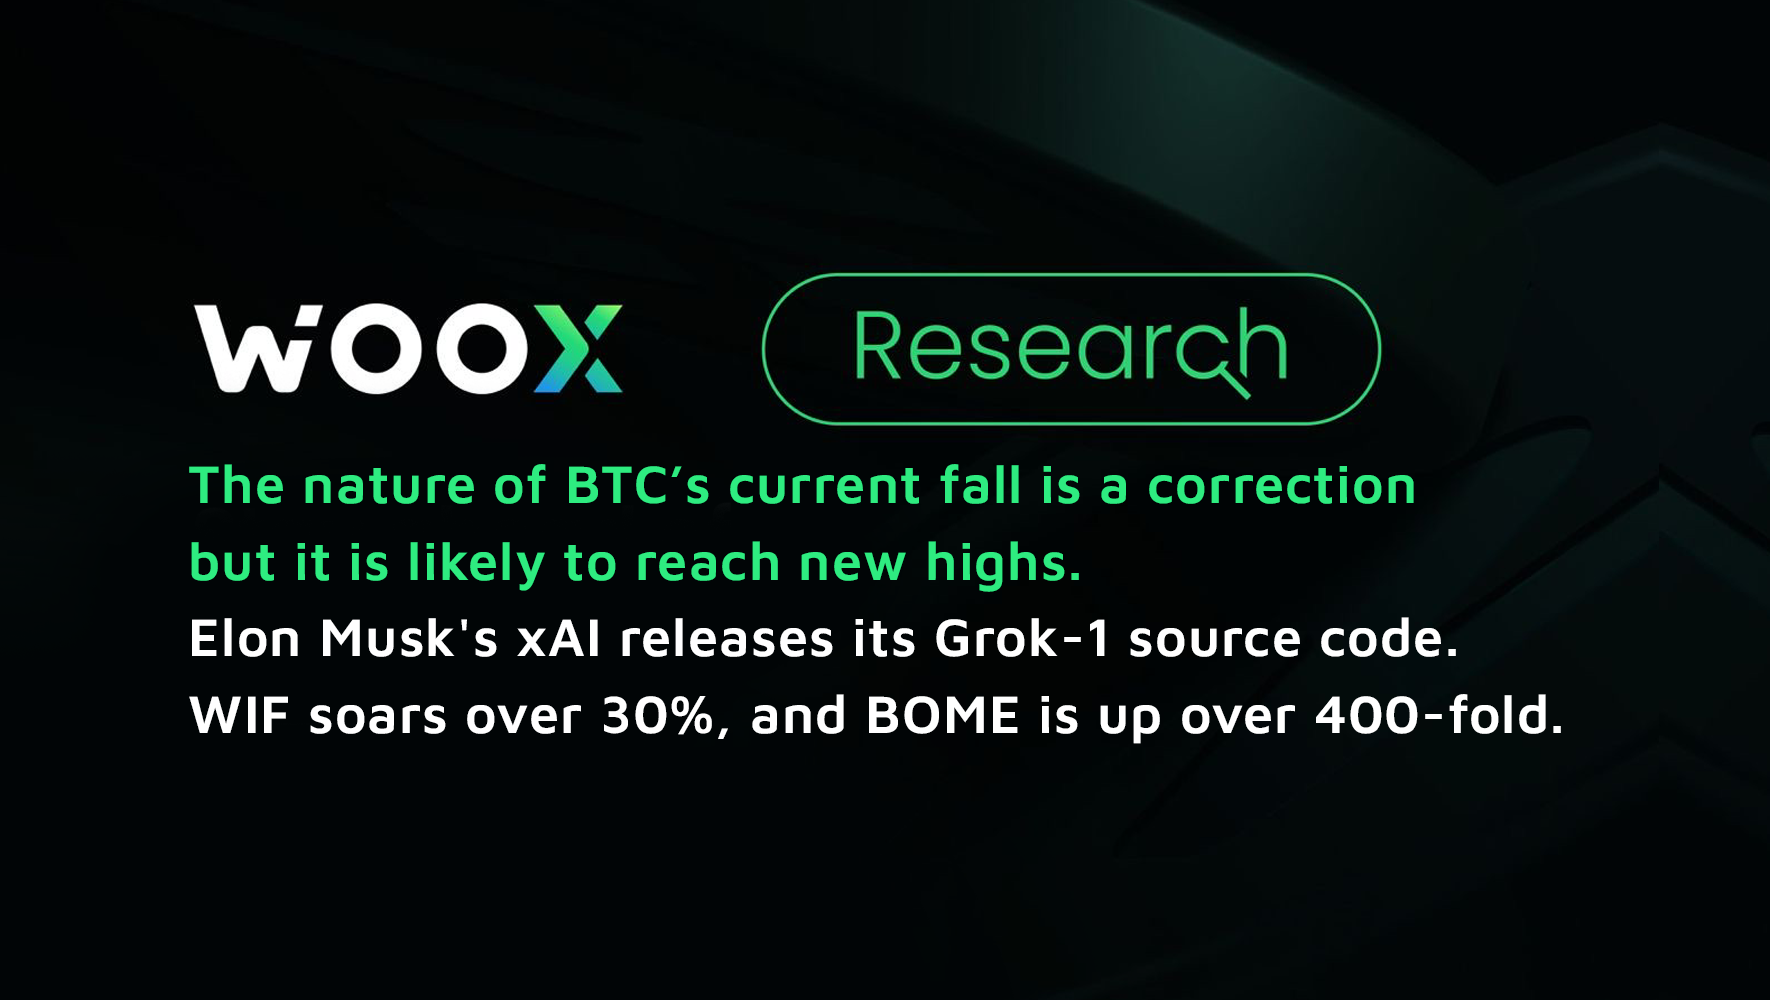 Elon Musk's xAI releases its Grok-1 source code